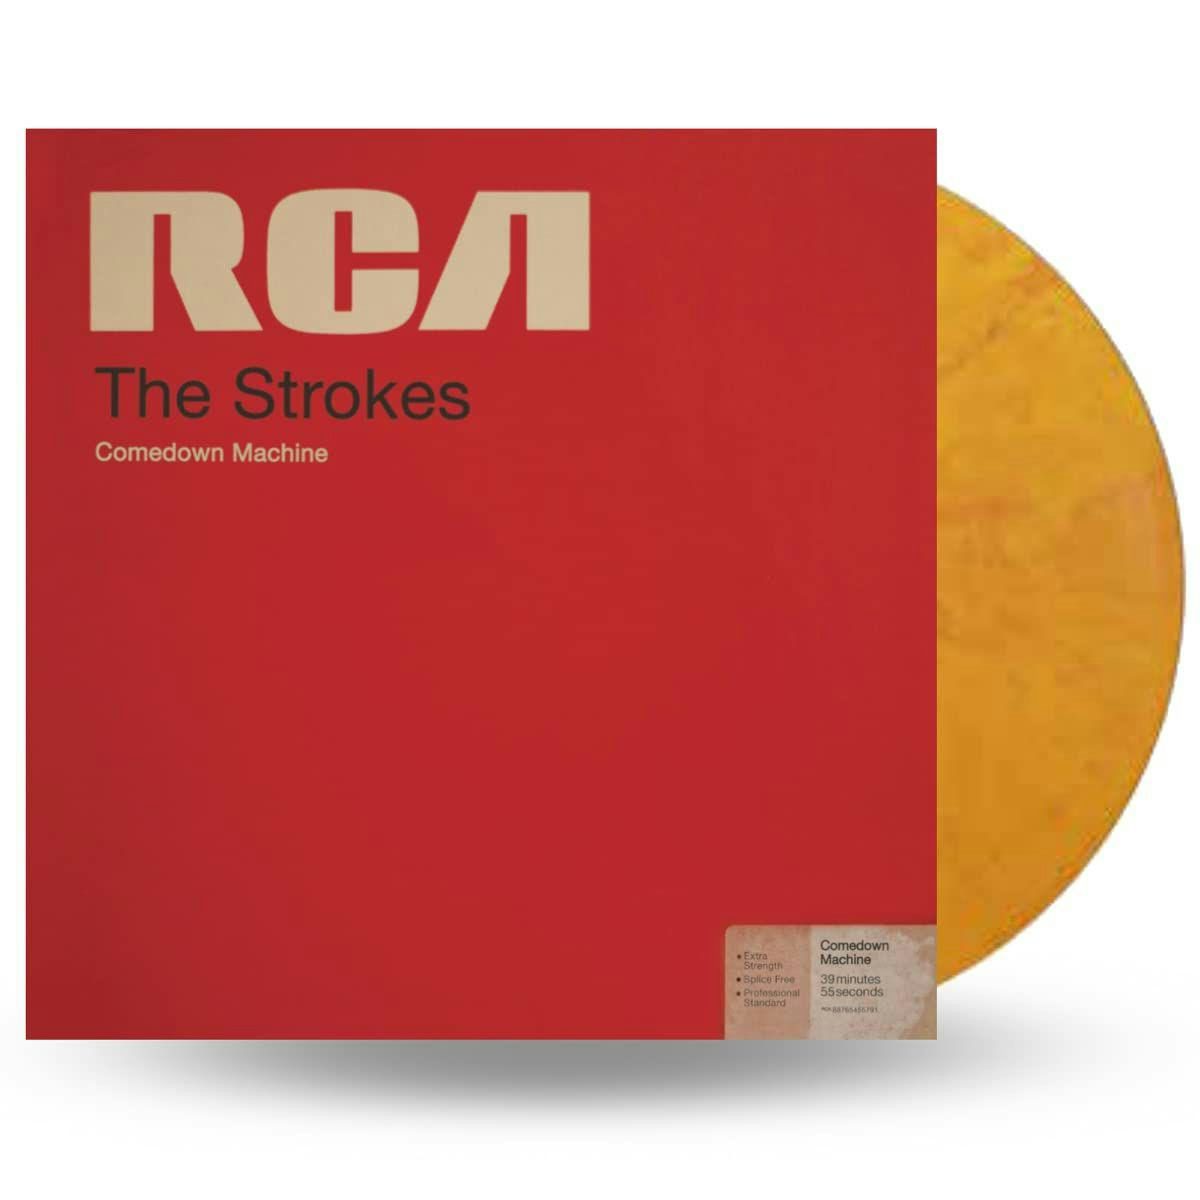 New Abnormal Vinyl Record - The Strokes